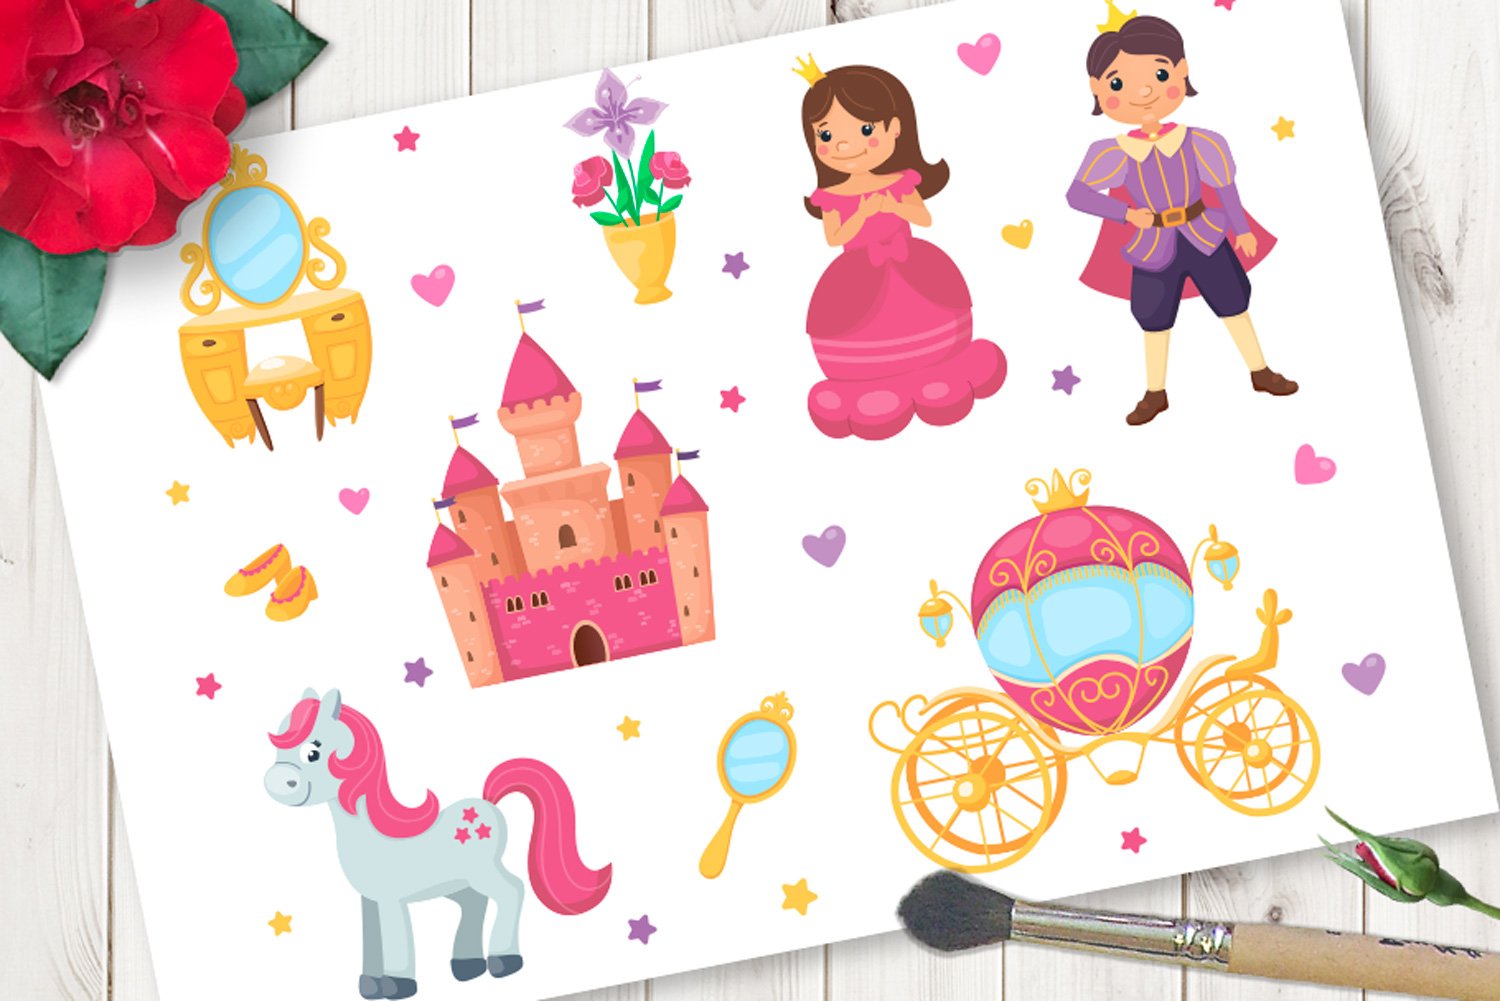 Princess cartoon vector set cover image.